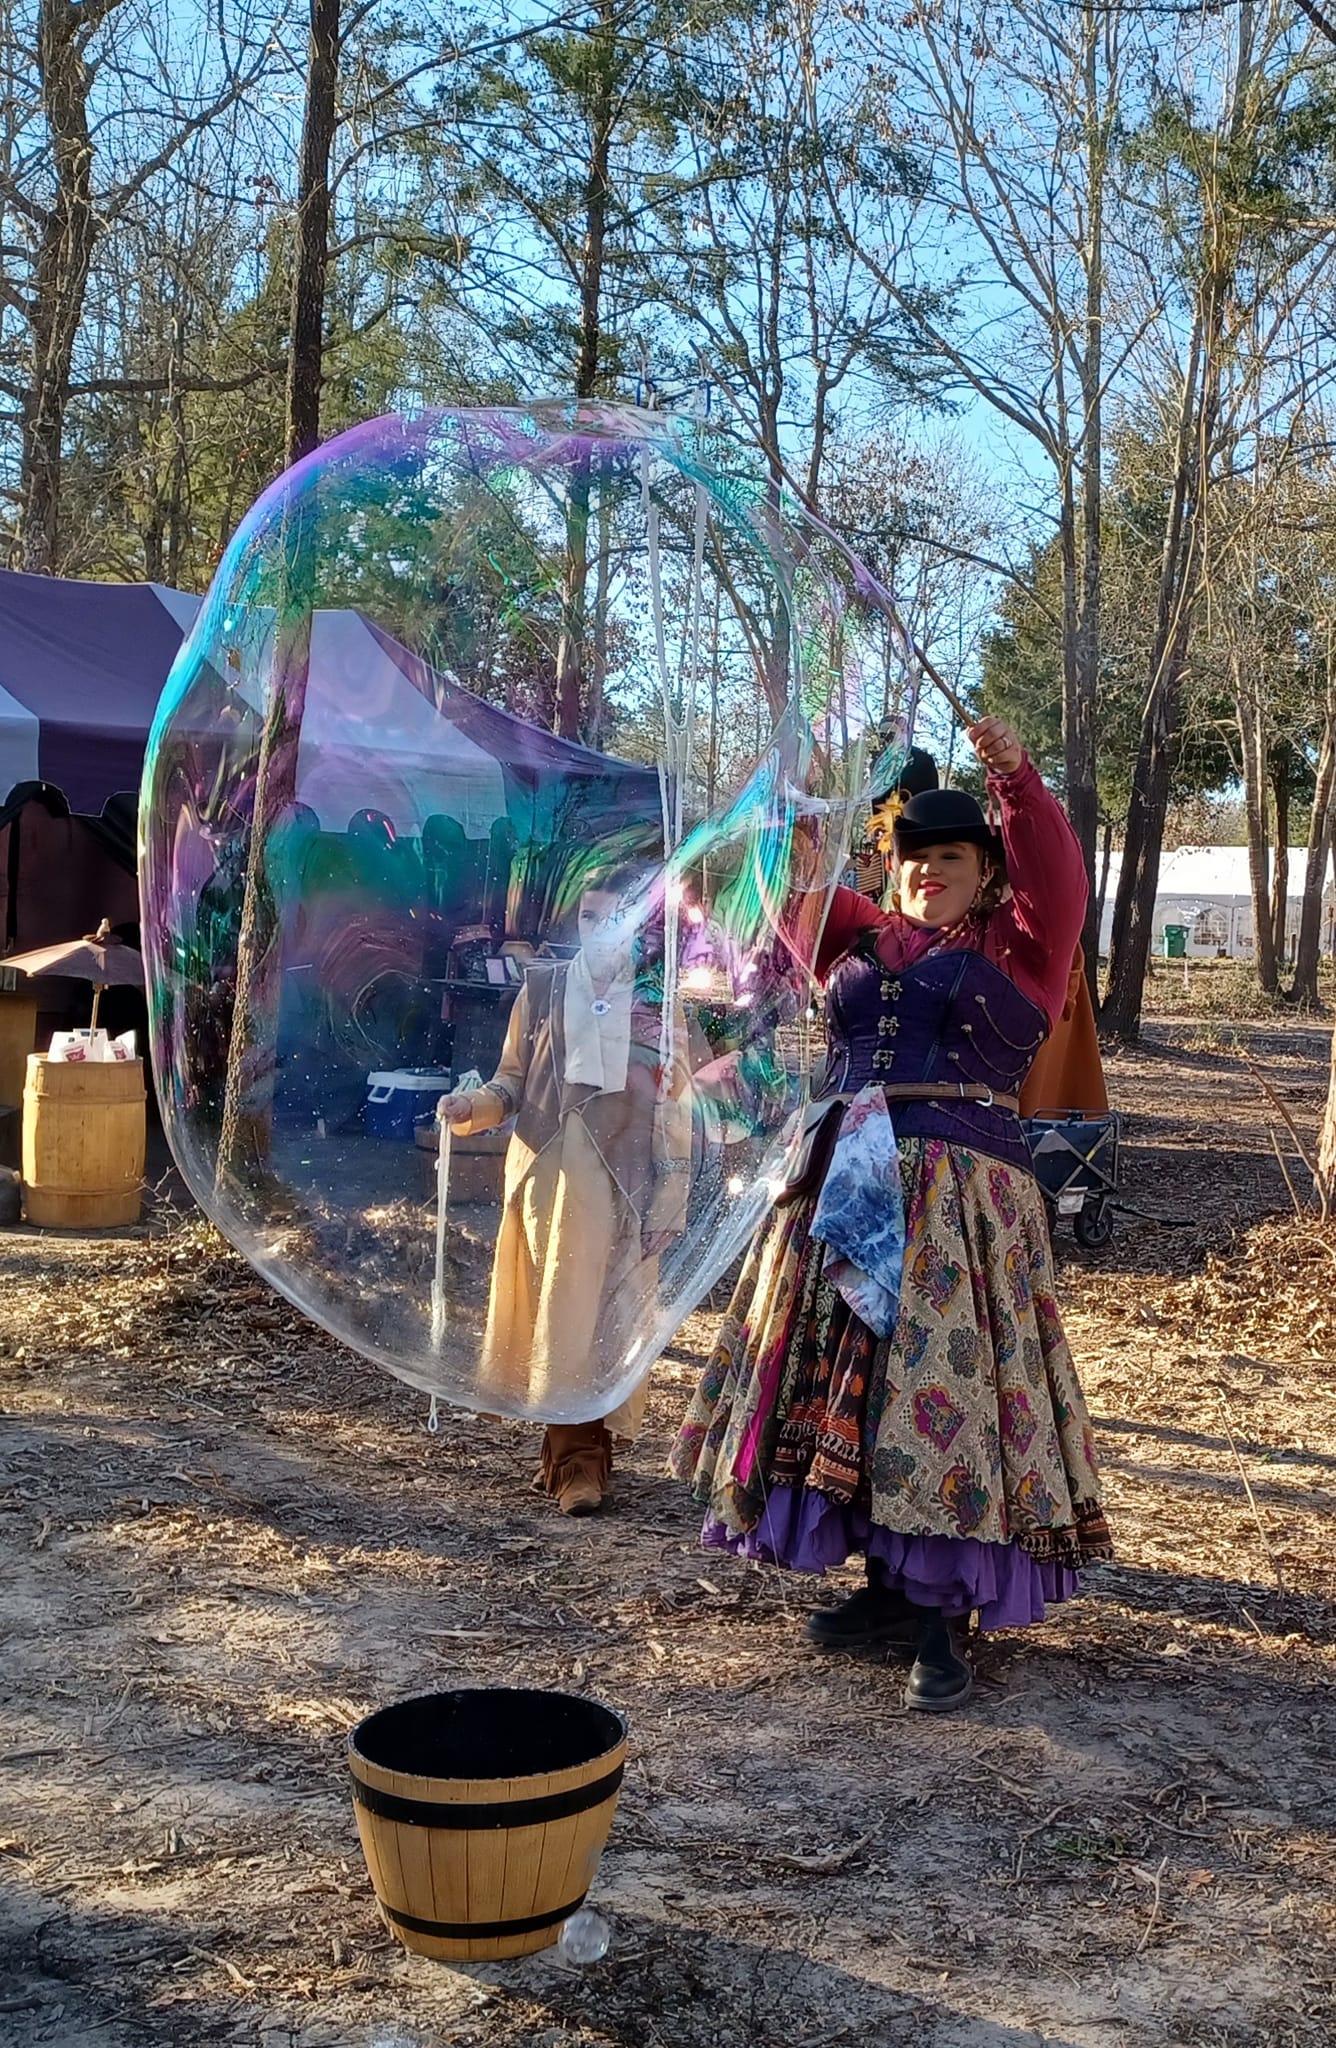 Ace making giant bubbles